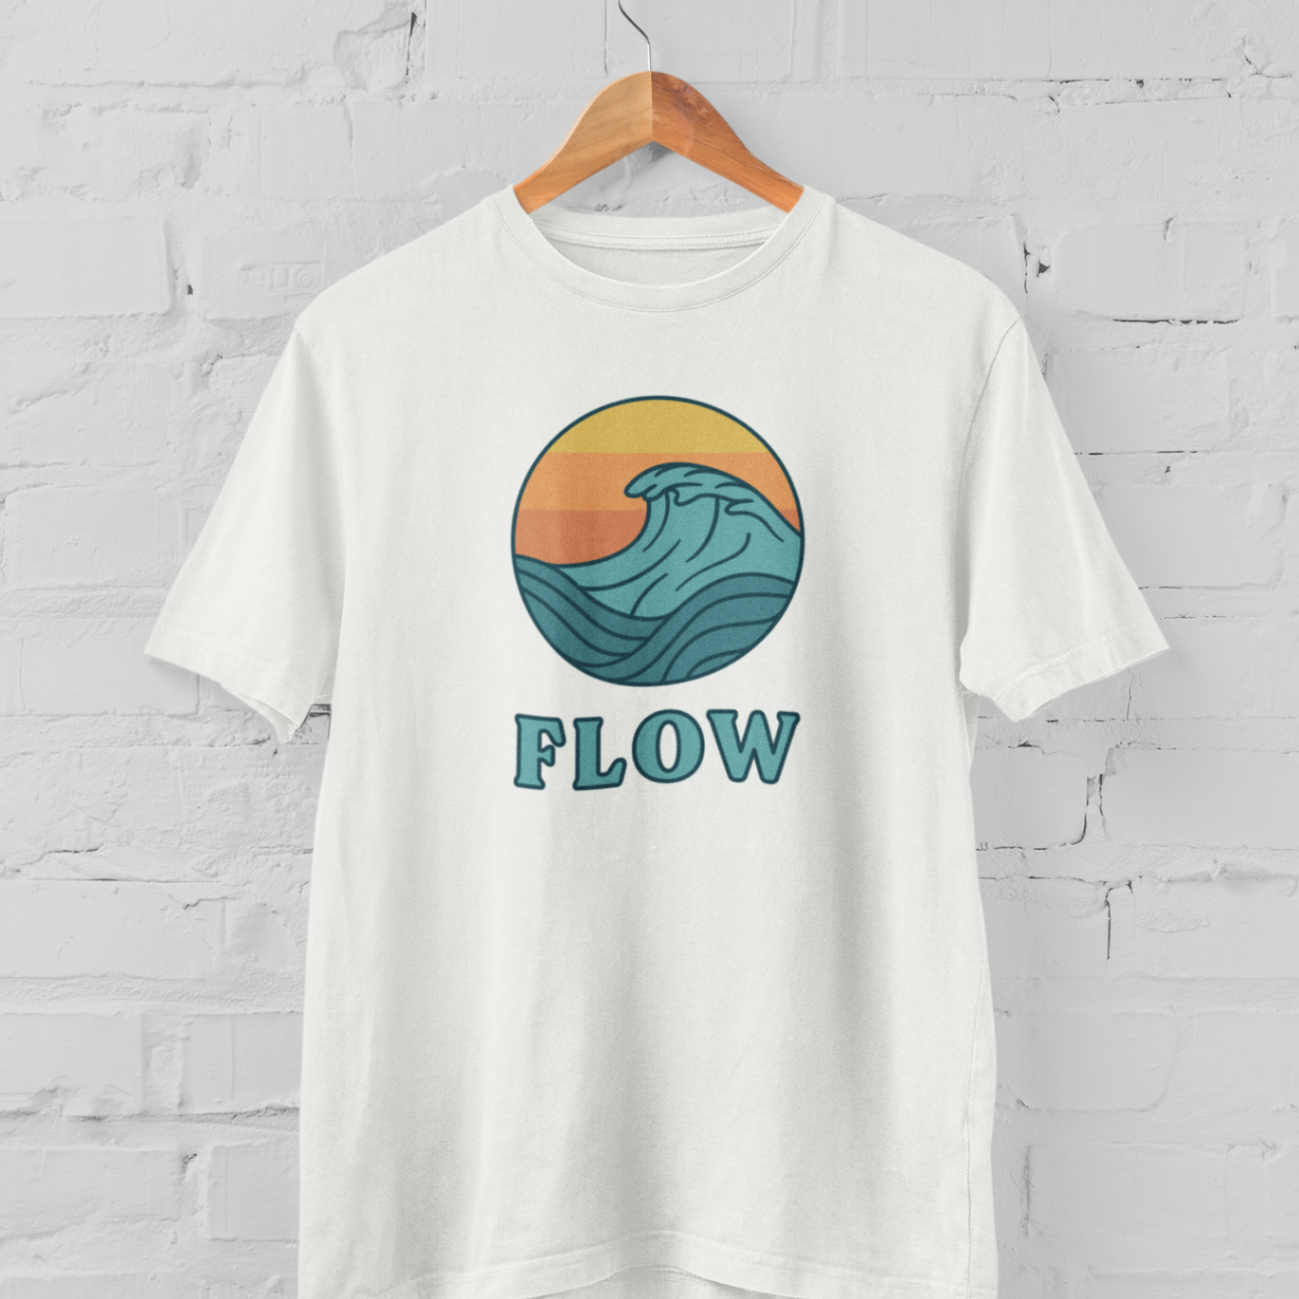 White t-shirt 'Flow' design mockup